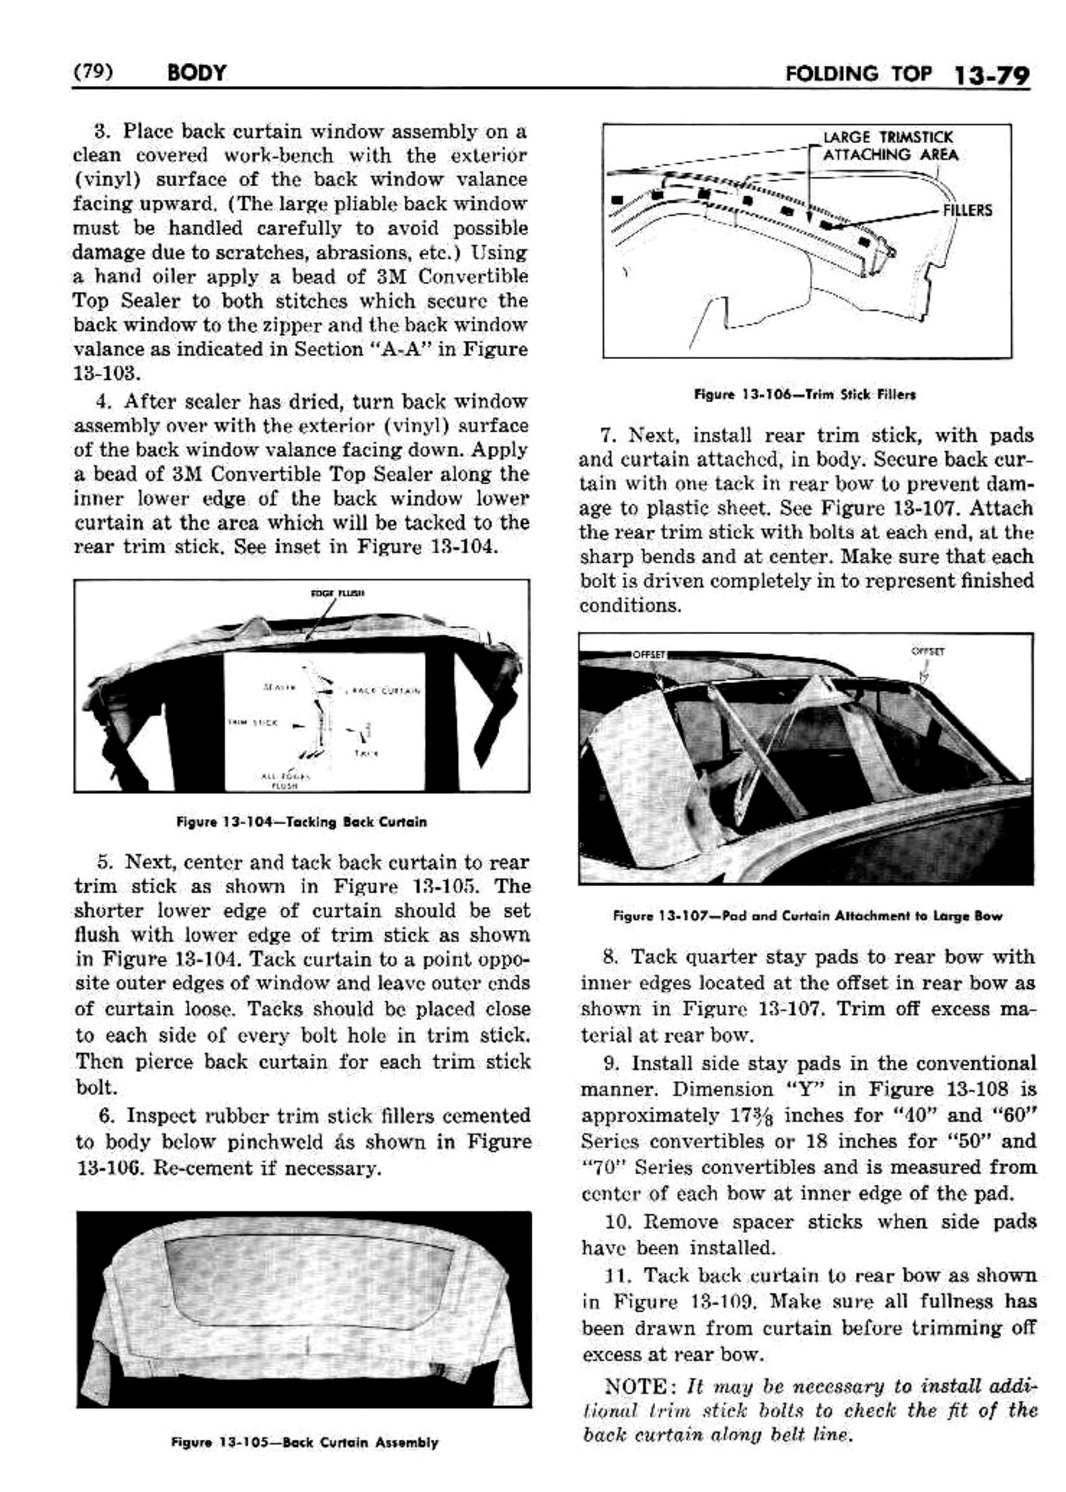 n_1958 Buick Body Service Manual-080-080.jpg